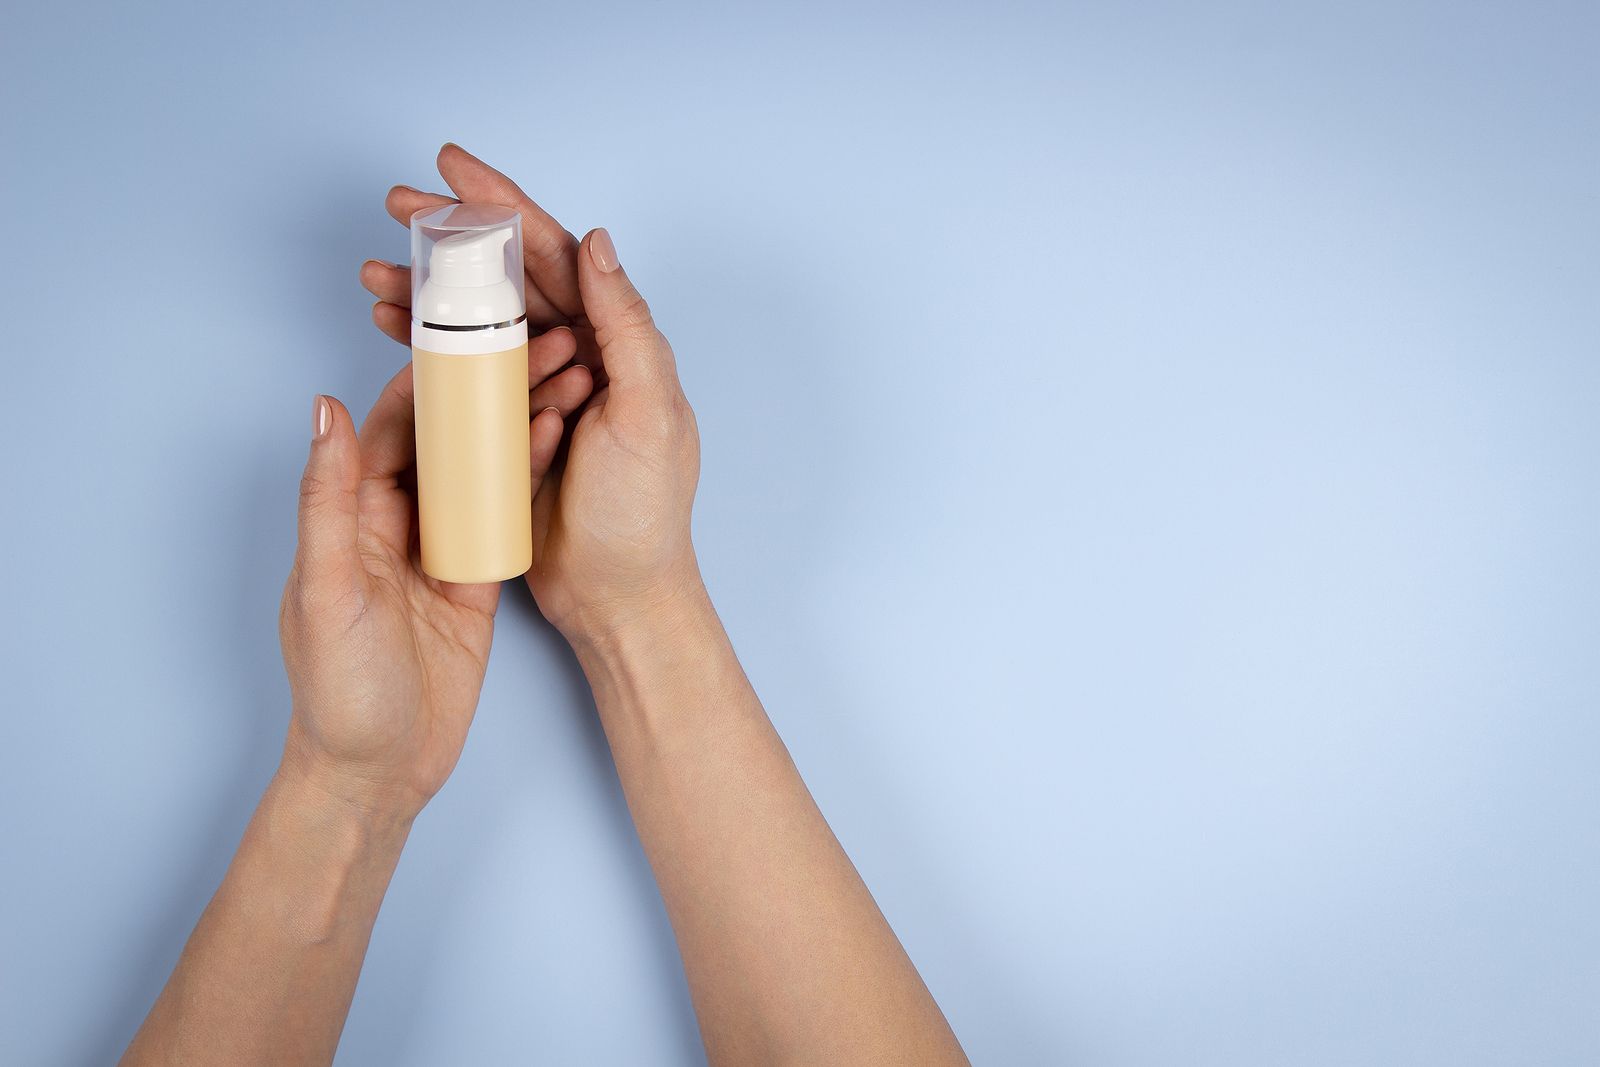 La base de maquillaje 'low cost' de Mercadona que reduce imperfecciones. Foto: Bigstock